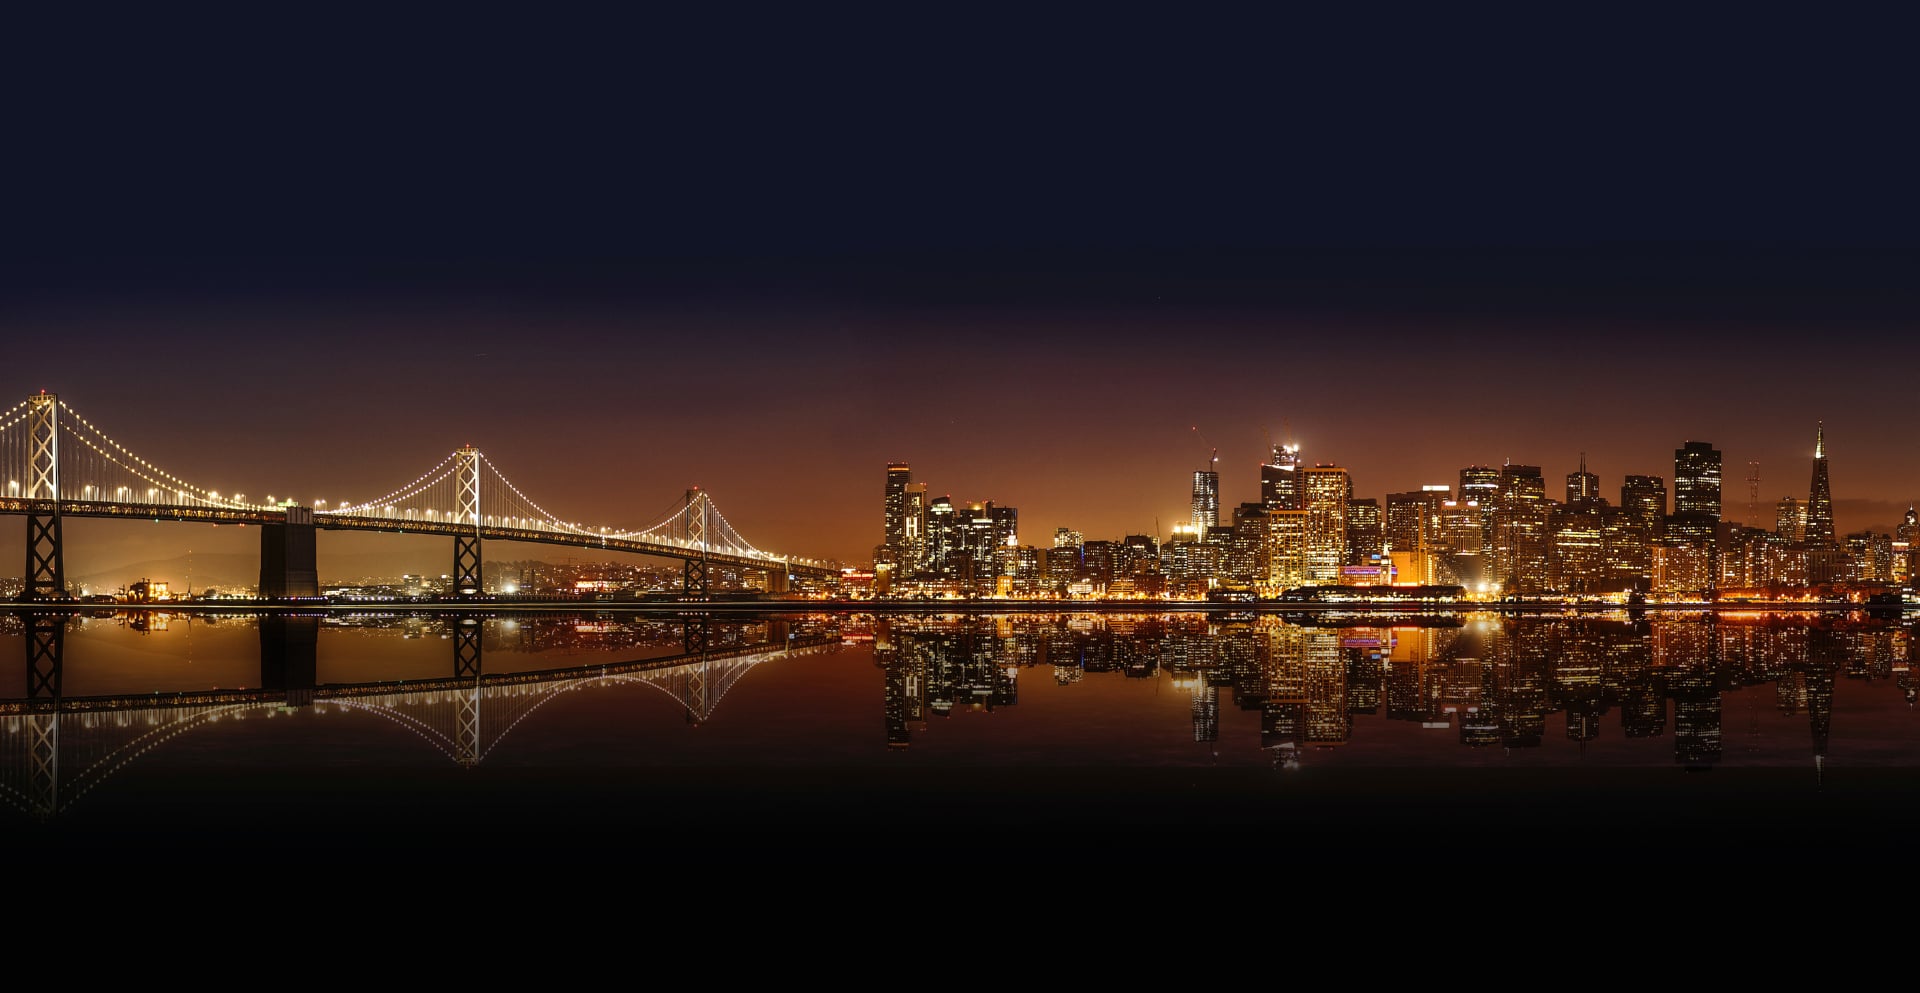 San Francisco-Oakland Bay Bridge at 1024 x 768 size wallpapers HD quality